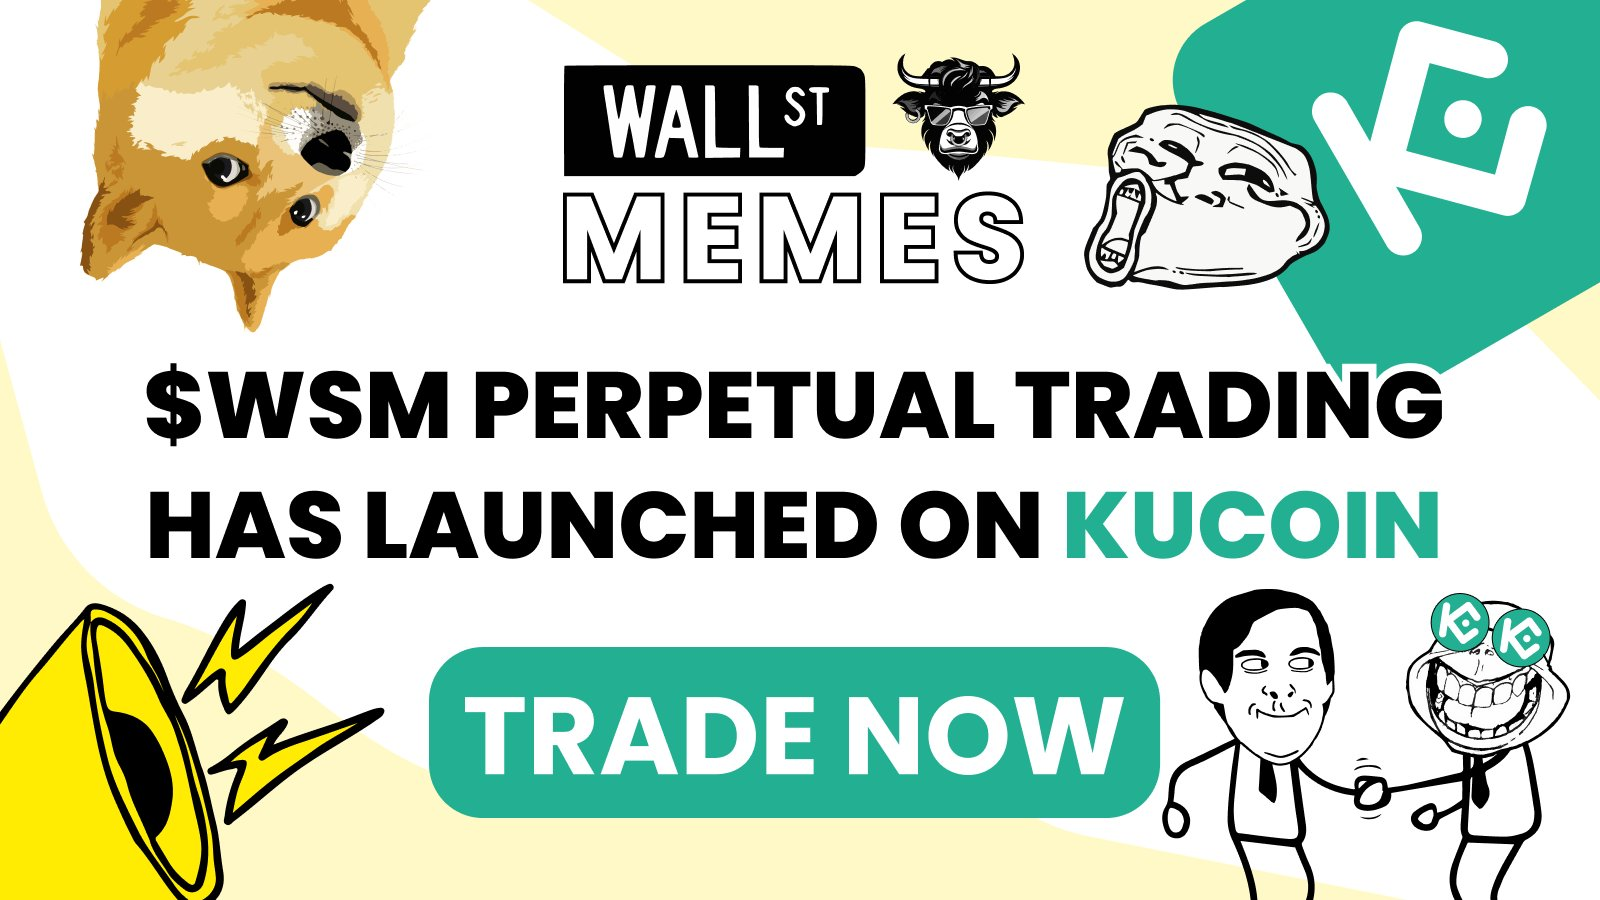 Wall Street Memes Perpetual Trading 